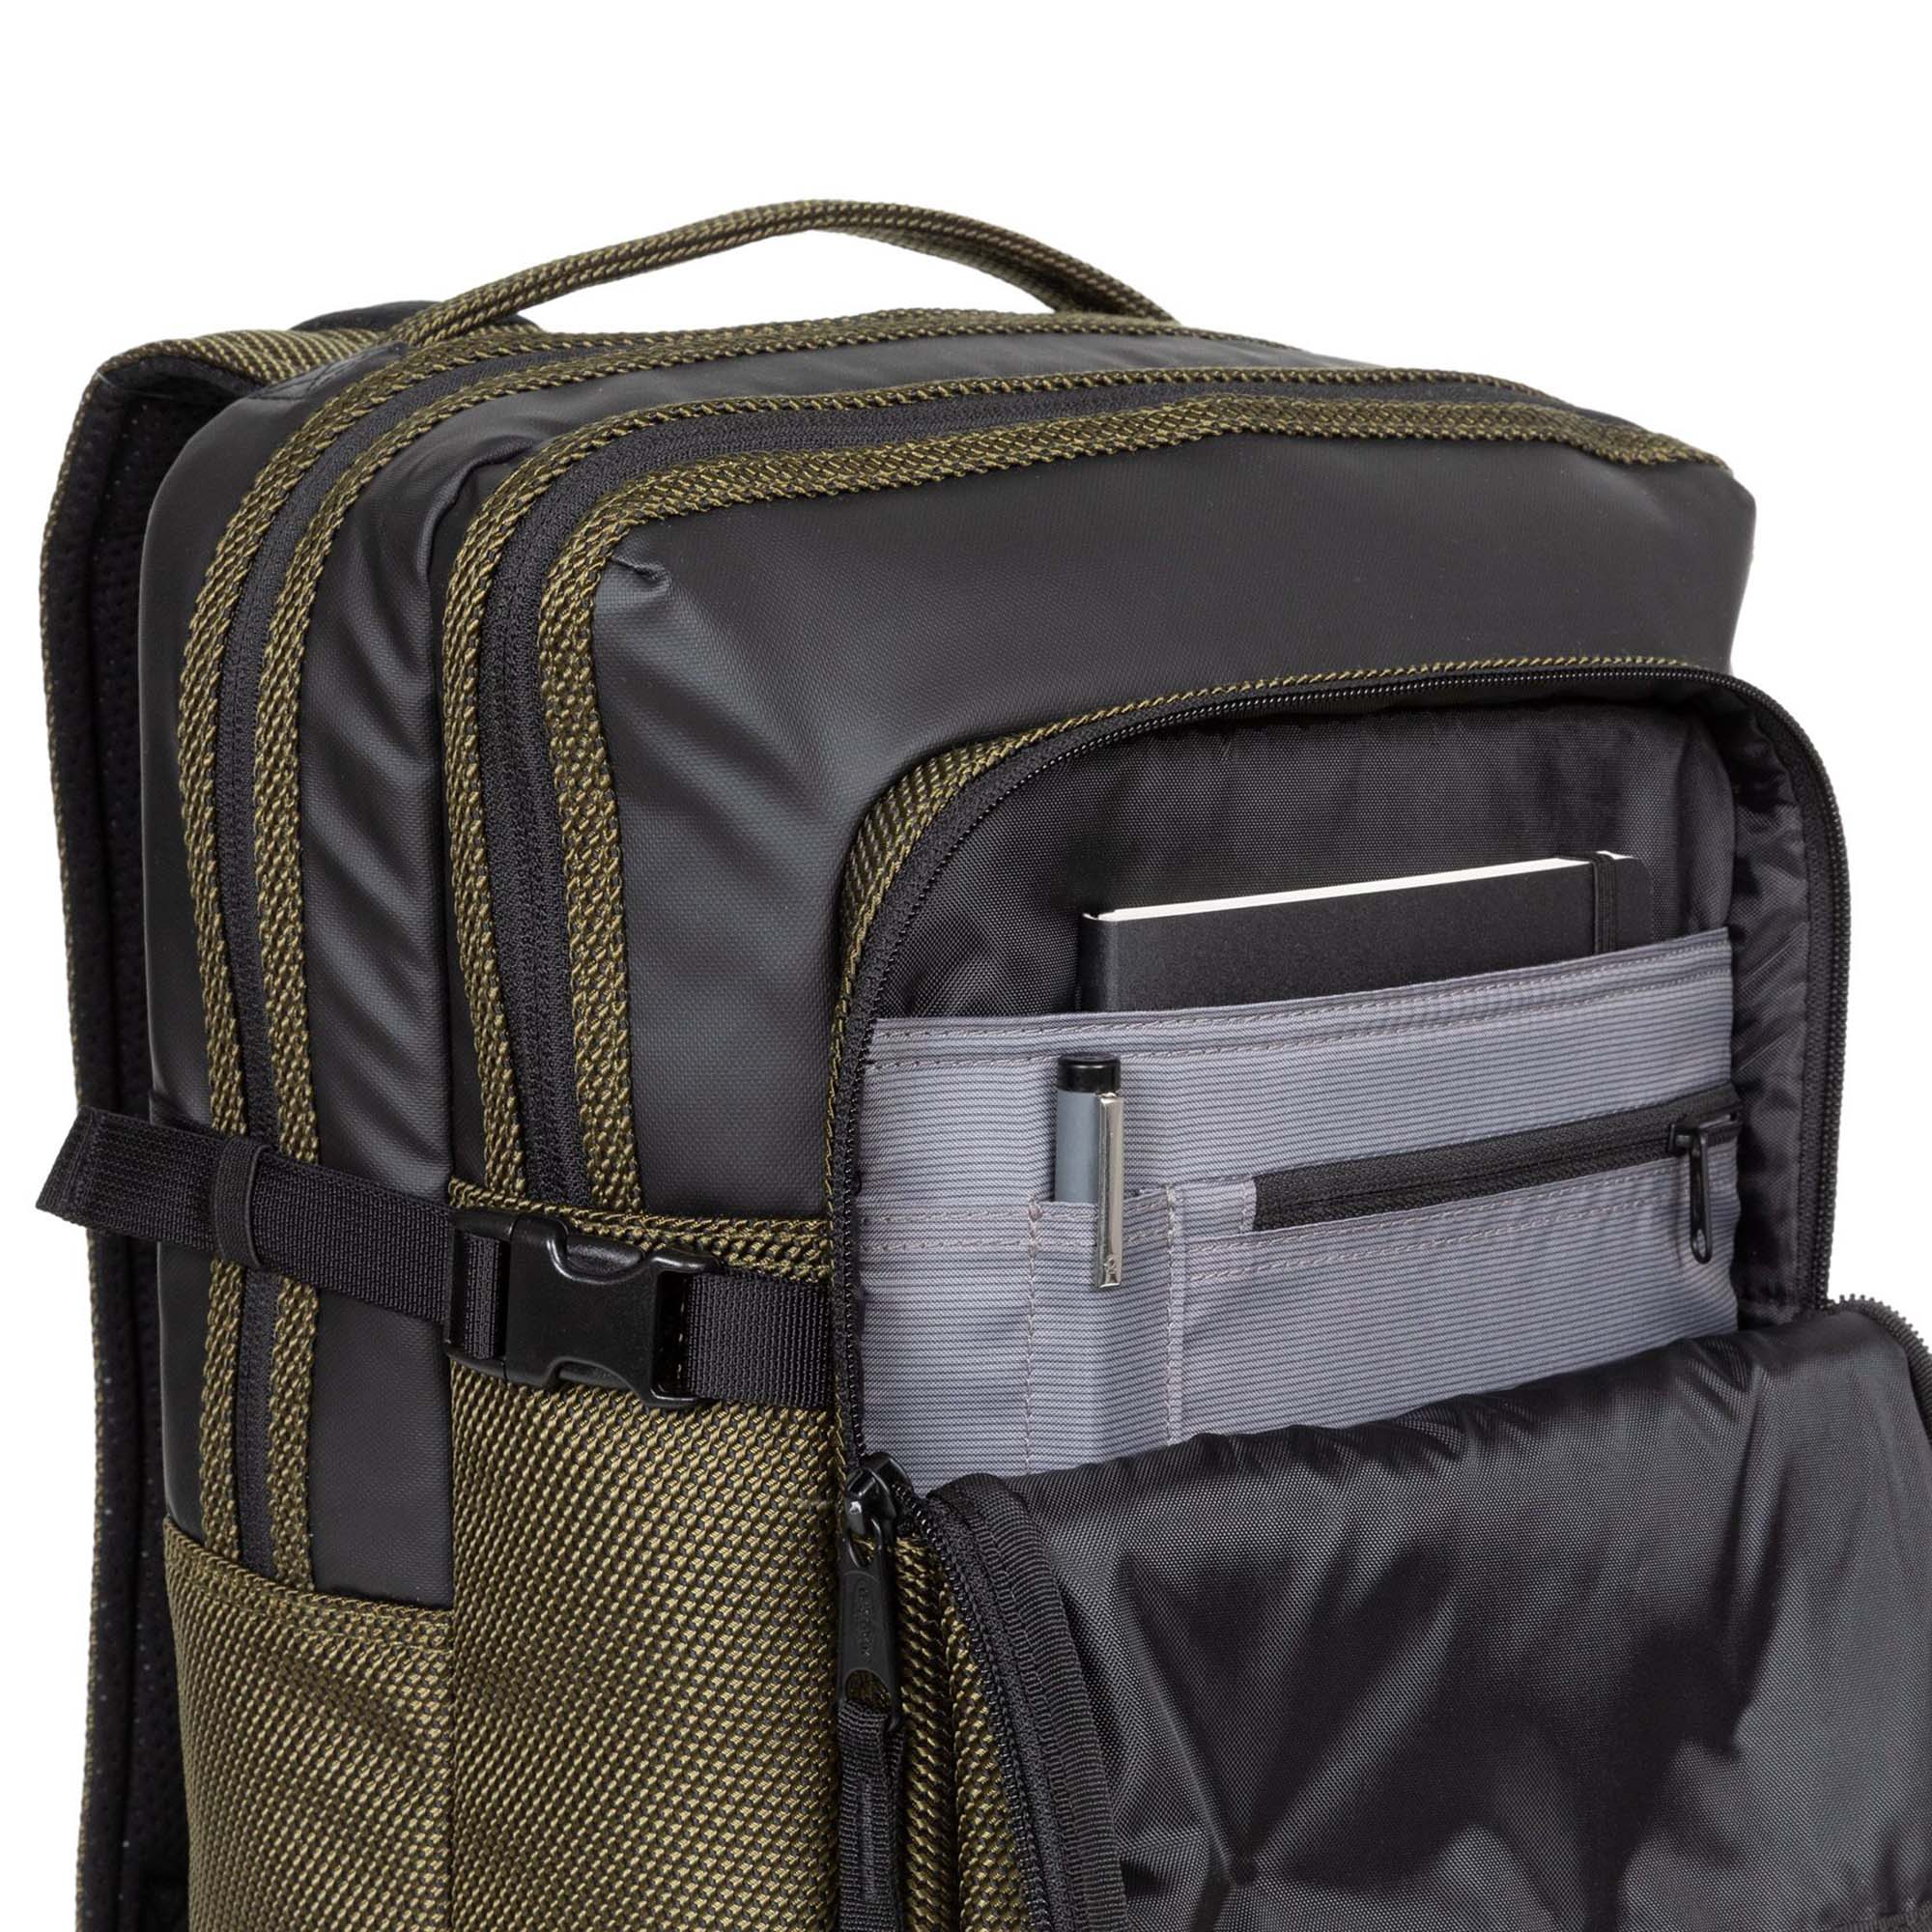 Eastpak Tecum L 22 Compact Day Backpack